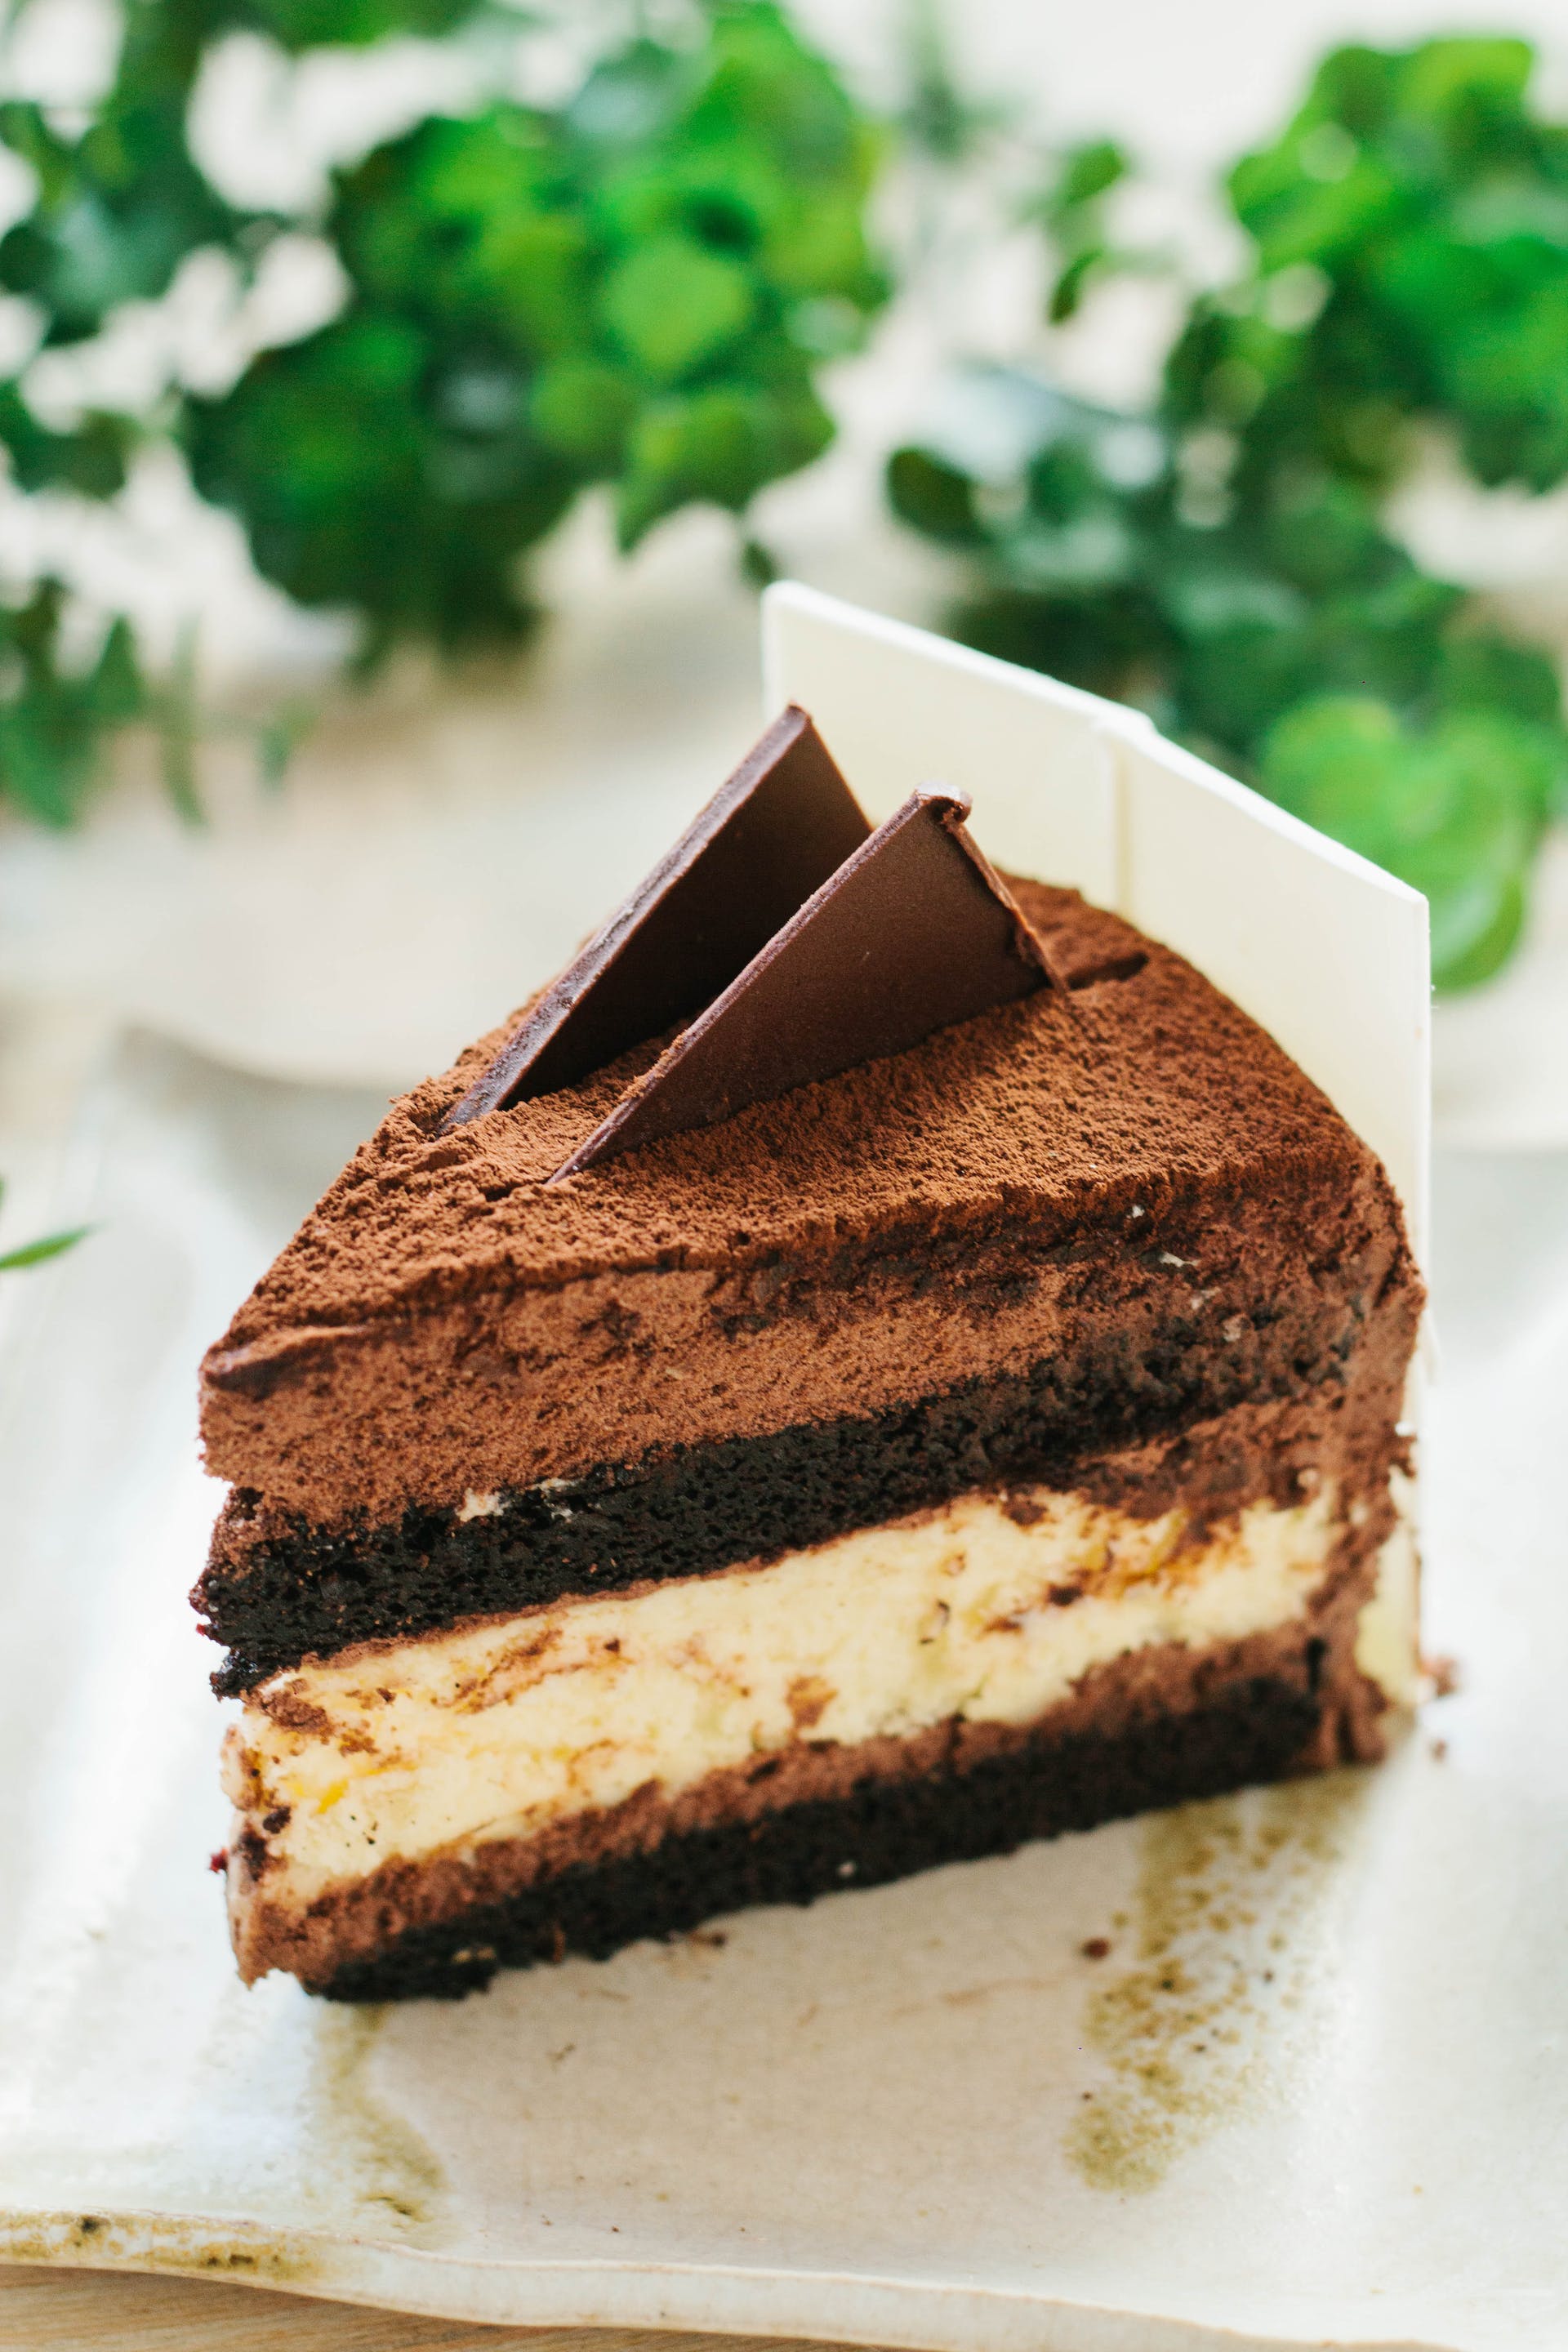 Slice of chocolate cake | Source: Pexels